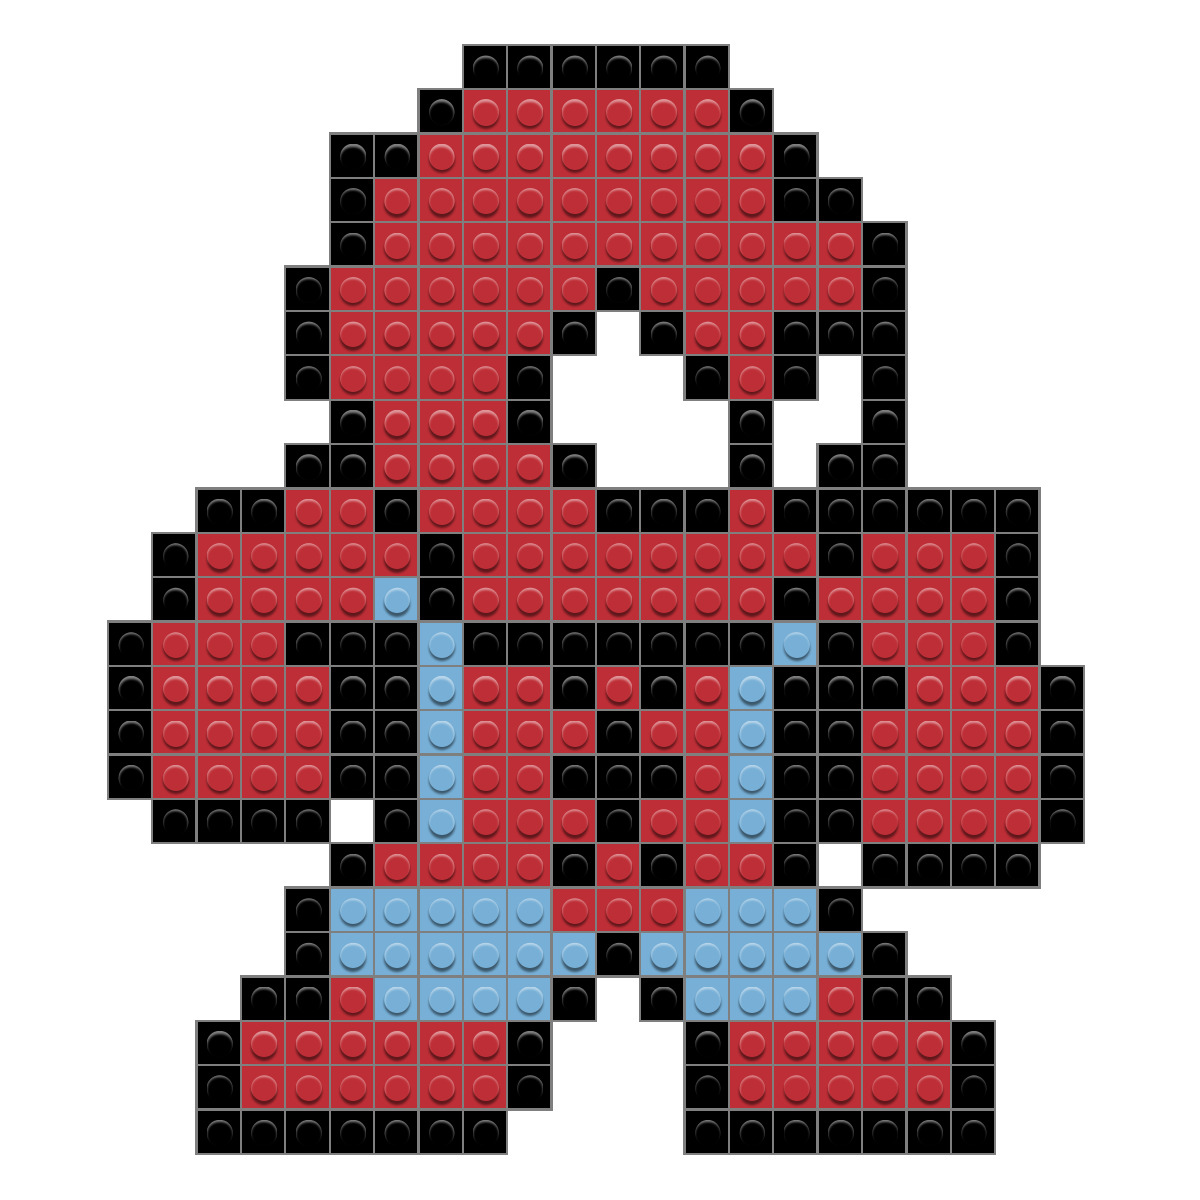 Spider Man Pixel Art Brik Pixel Art Designs Spiderman Pixel Art Images